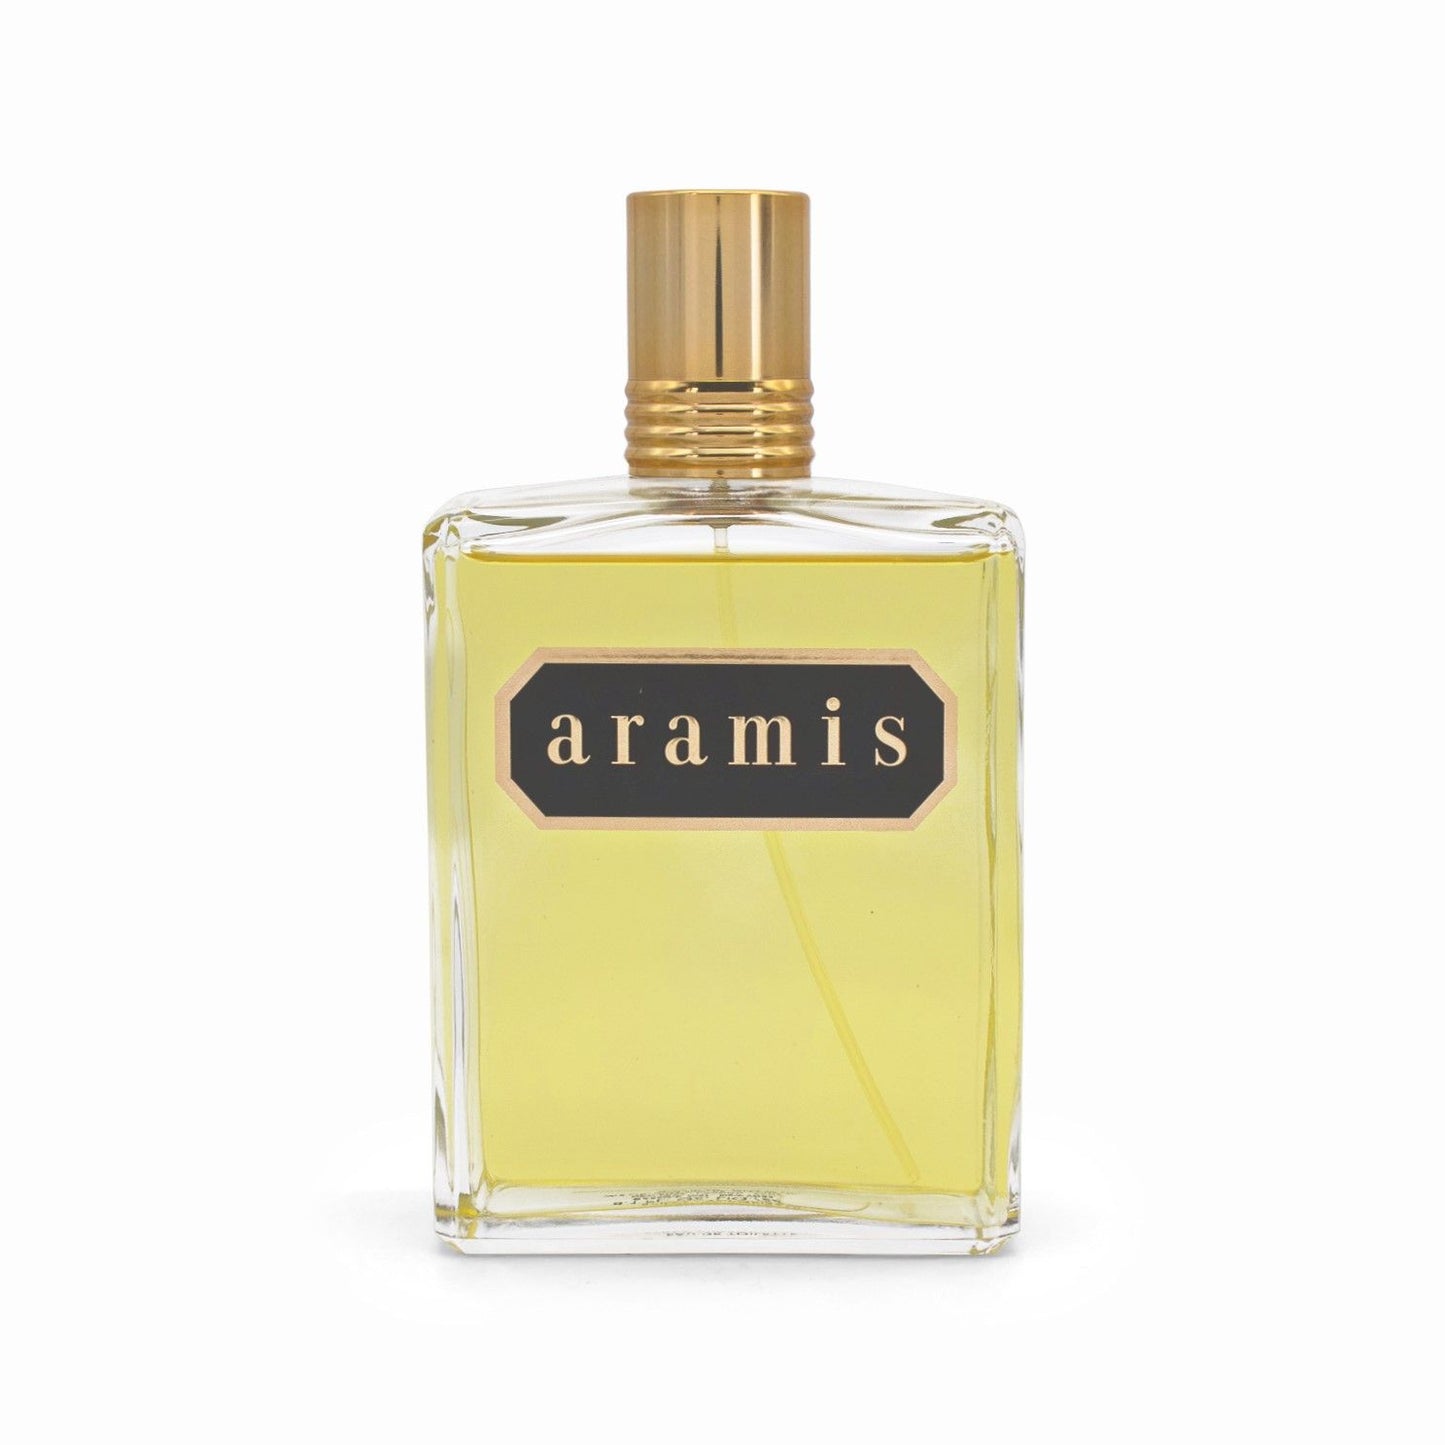 Aramis Aramis Deluxe Edition Eau de Toilette Spray 240ml - Imperfect Box